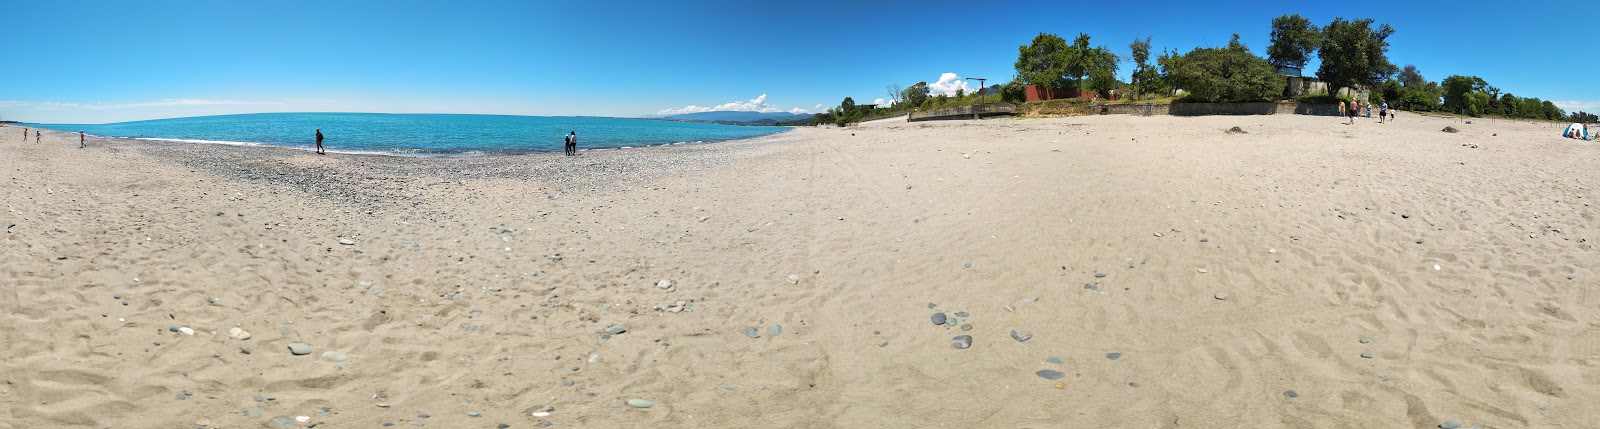 Foto de Tkhubuni beach com reto e longo